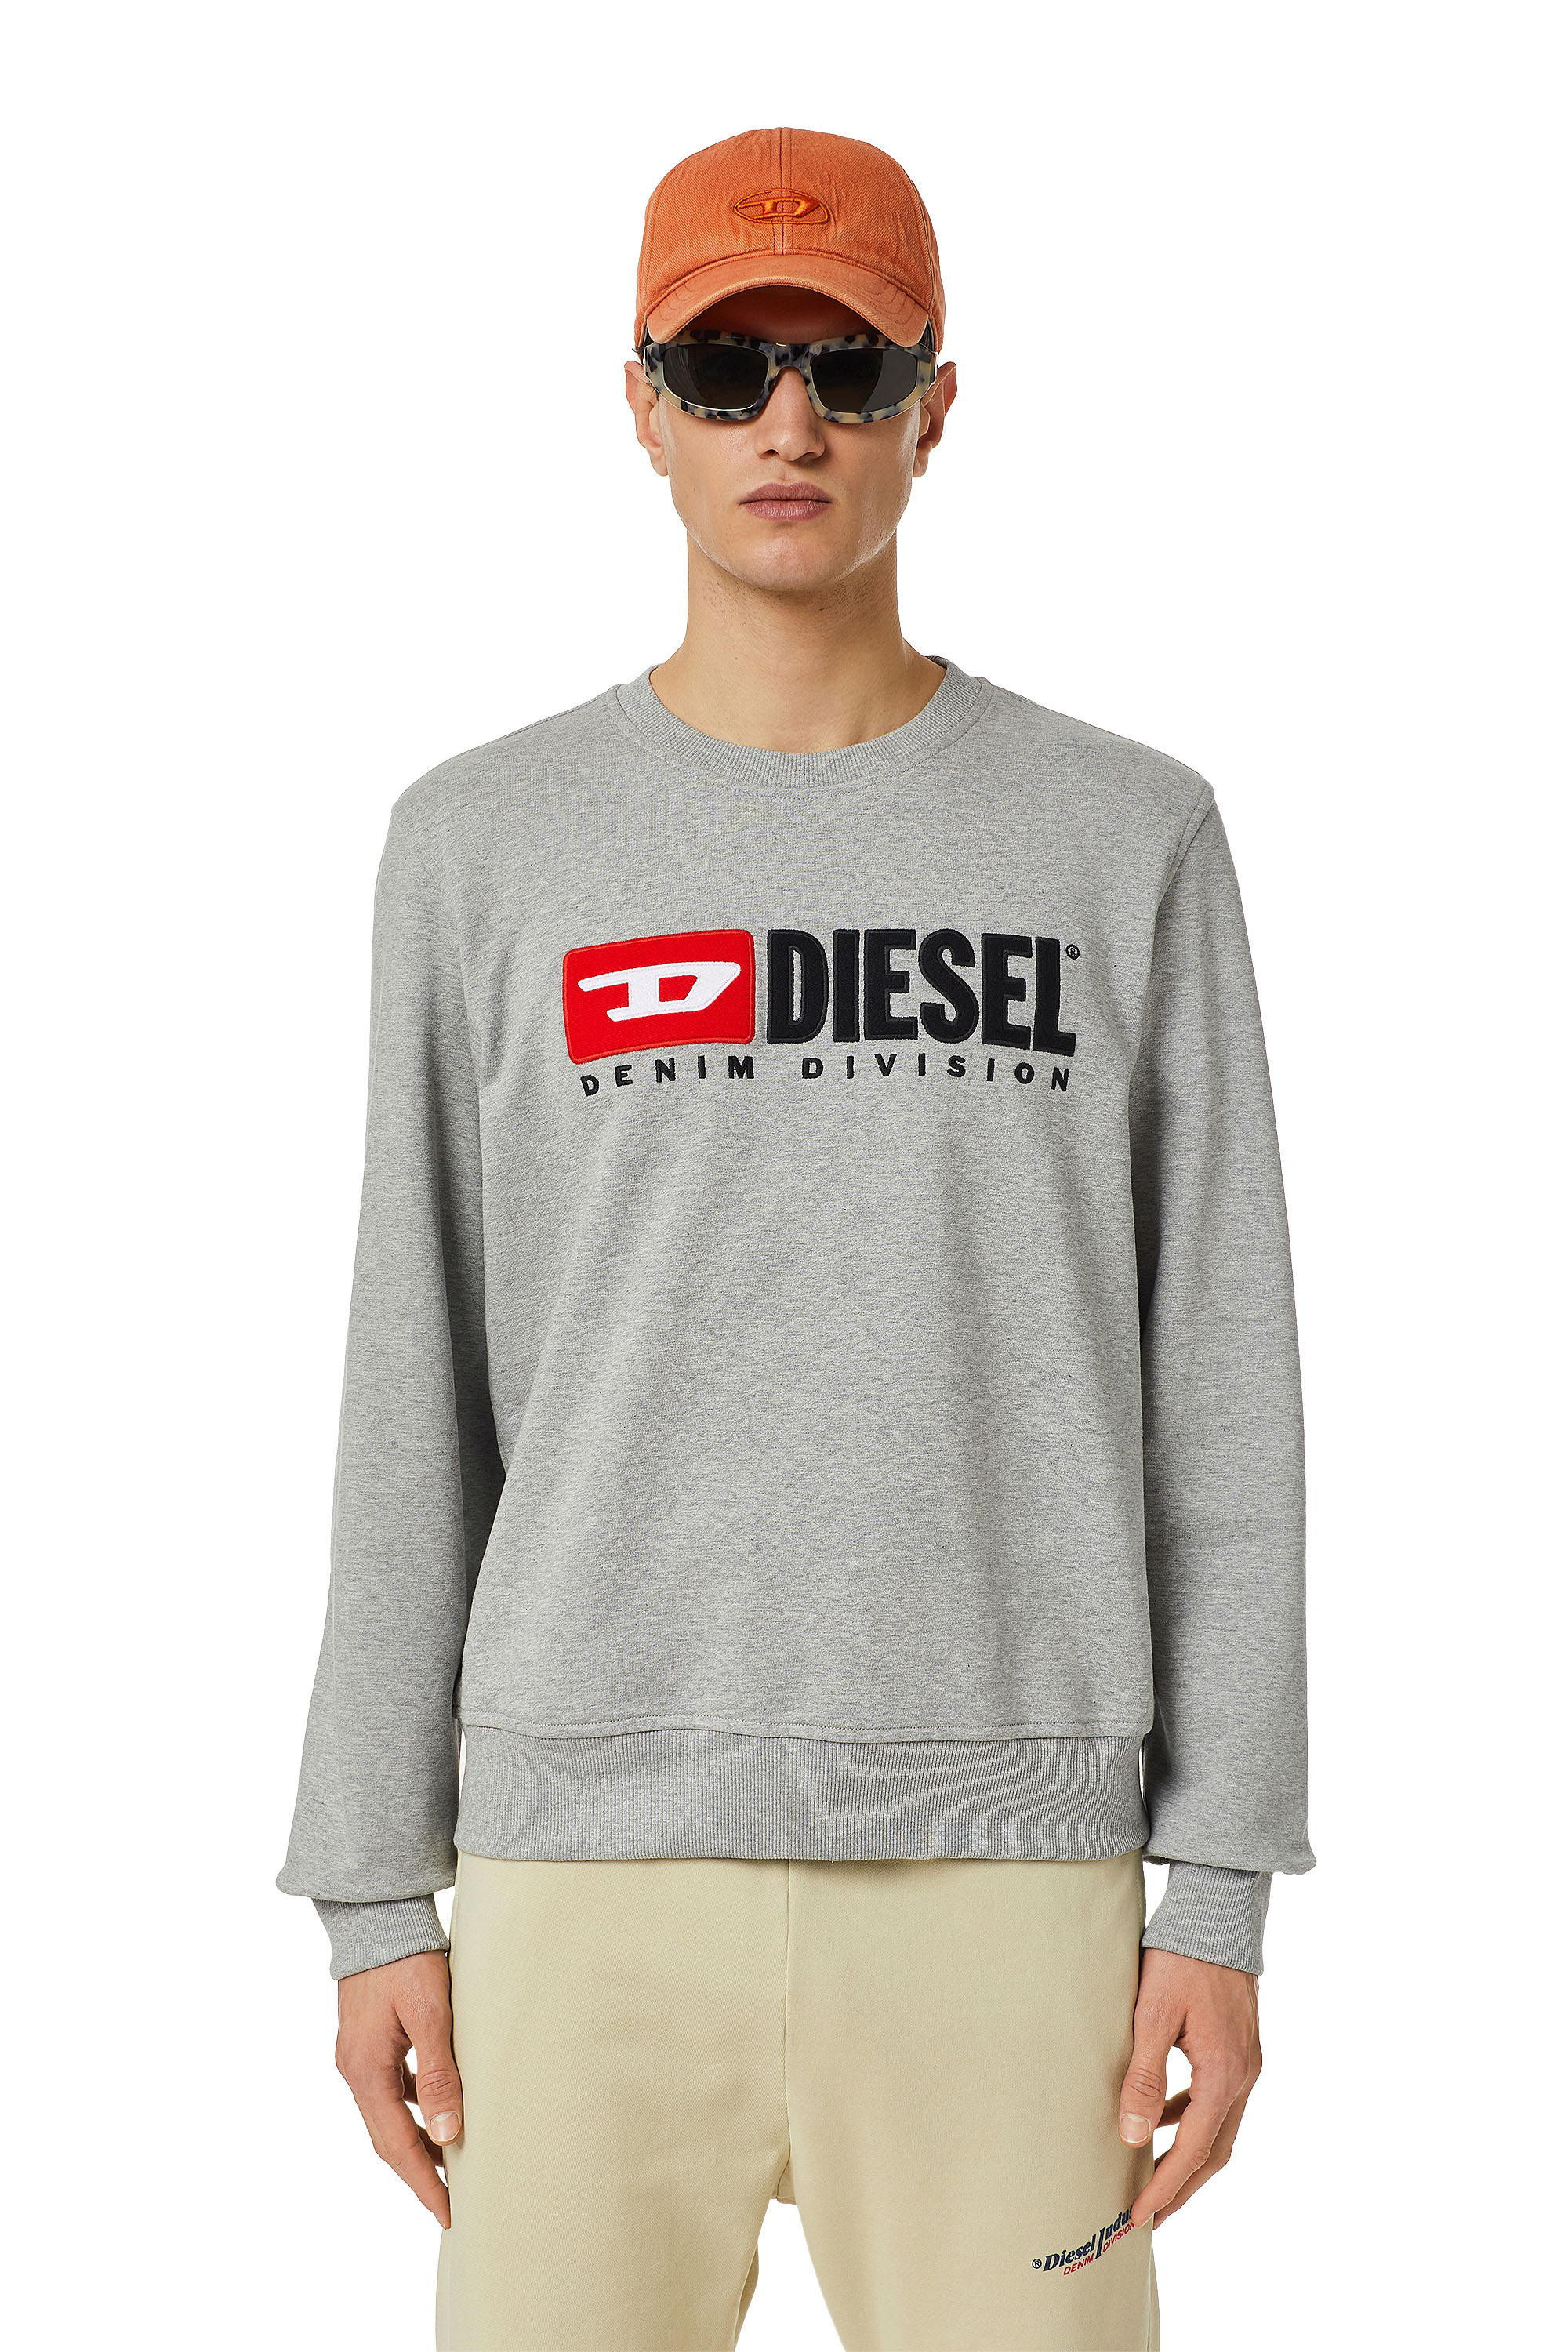 Diesel - S-GINN-DIV, Grey - Image 1